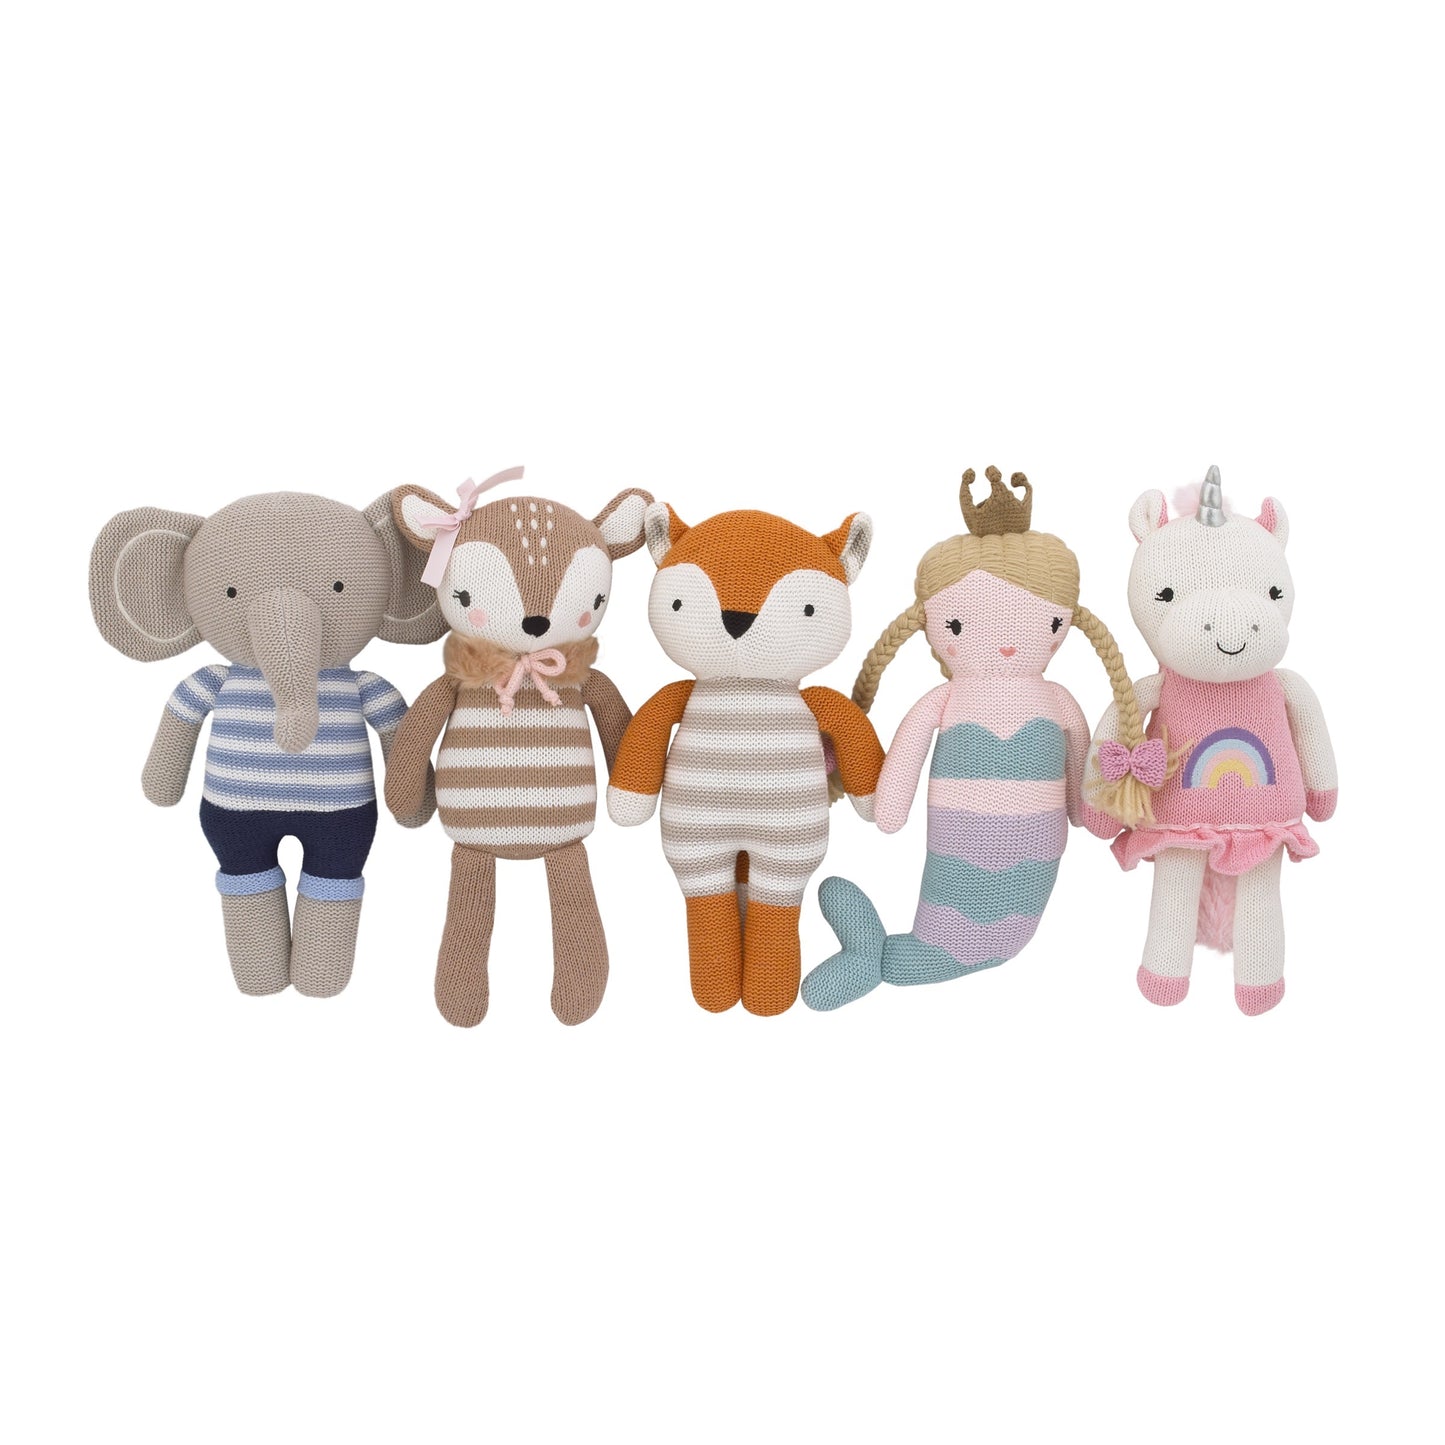 Cuddle Me Brown/Pink Deer 100% Cotton Knitted Plush Toy - Penelope